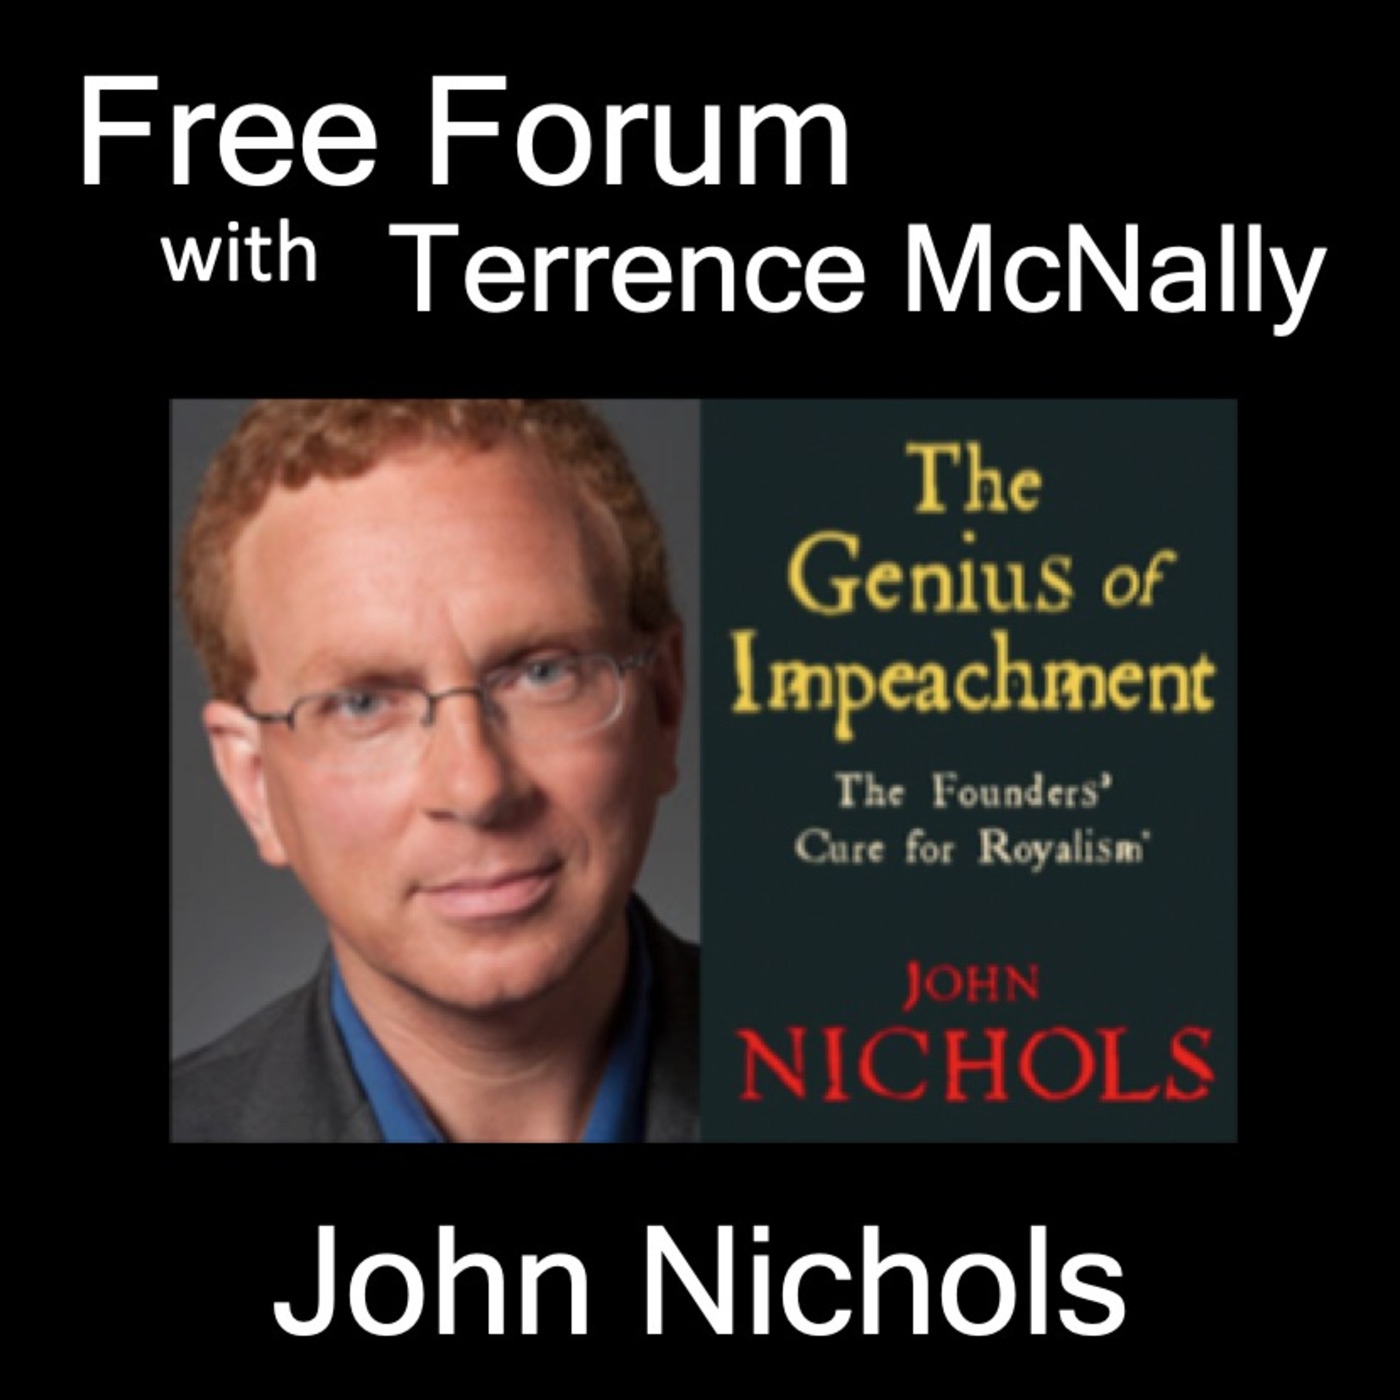 JOHN NICHOLS - Getting Impeachment Right & Winning the Rust Belt in 2020